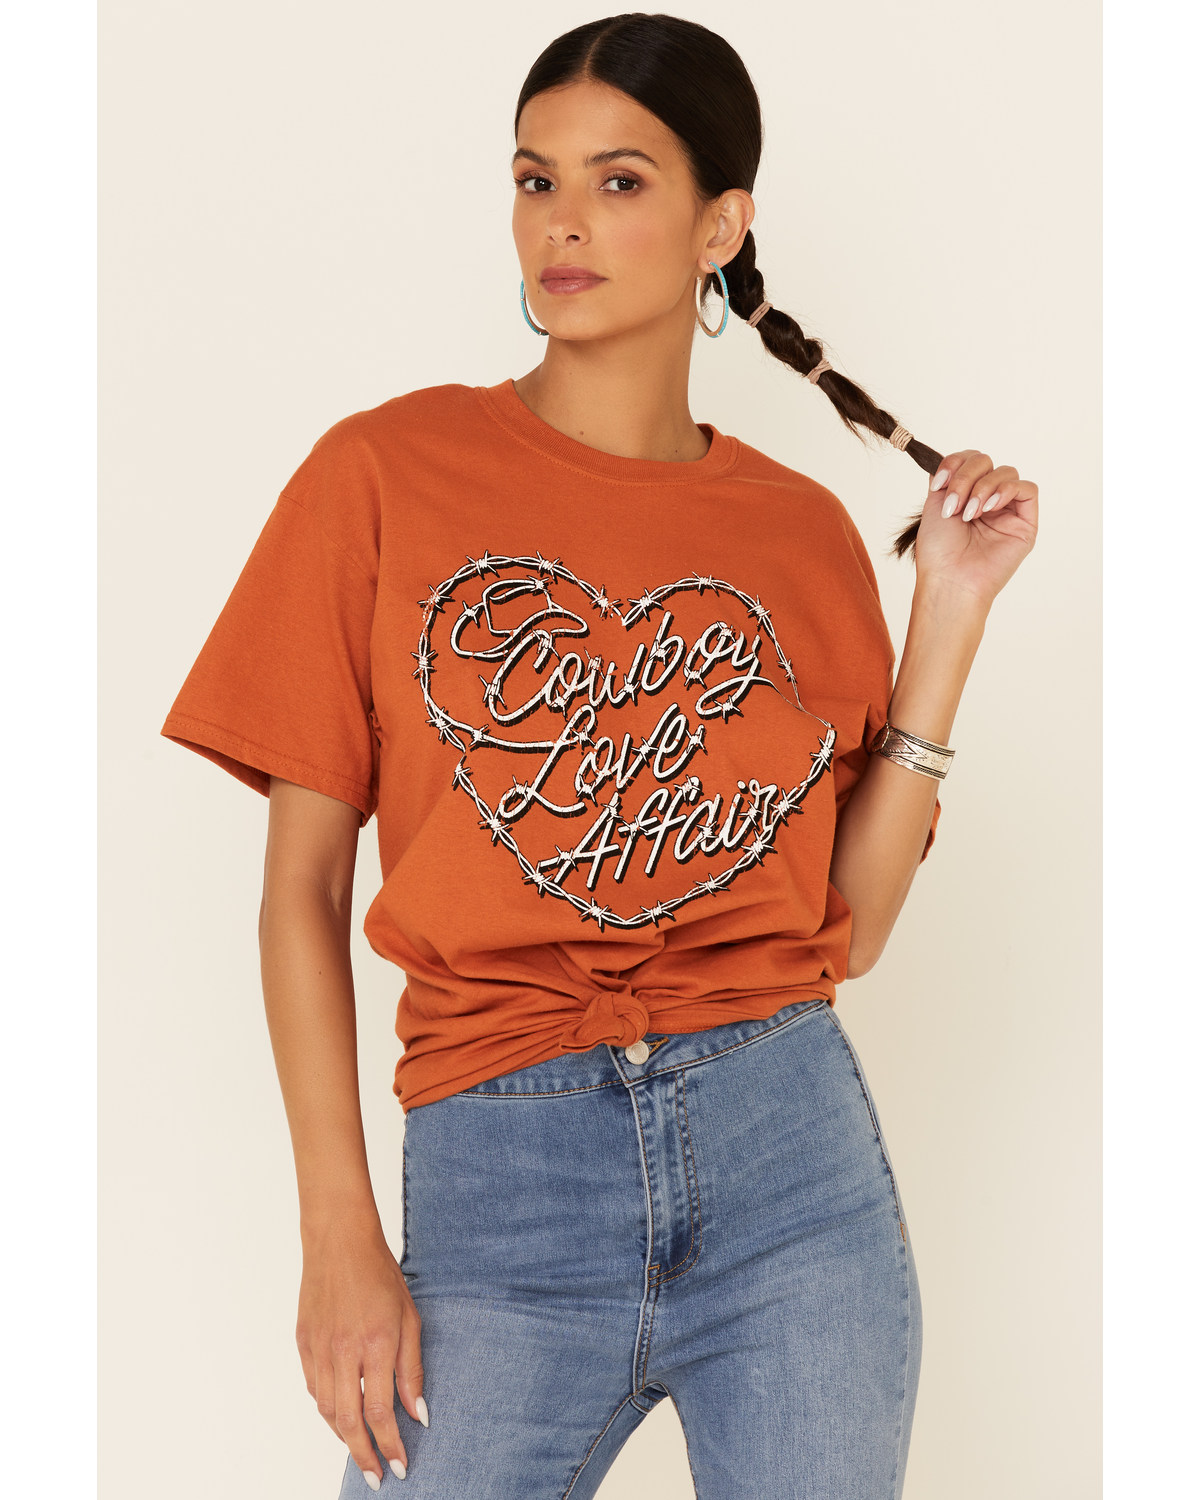 American Highway Women's Cowboy Love Affair Graphic Short Sleeve Tee